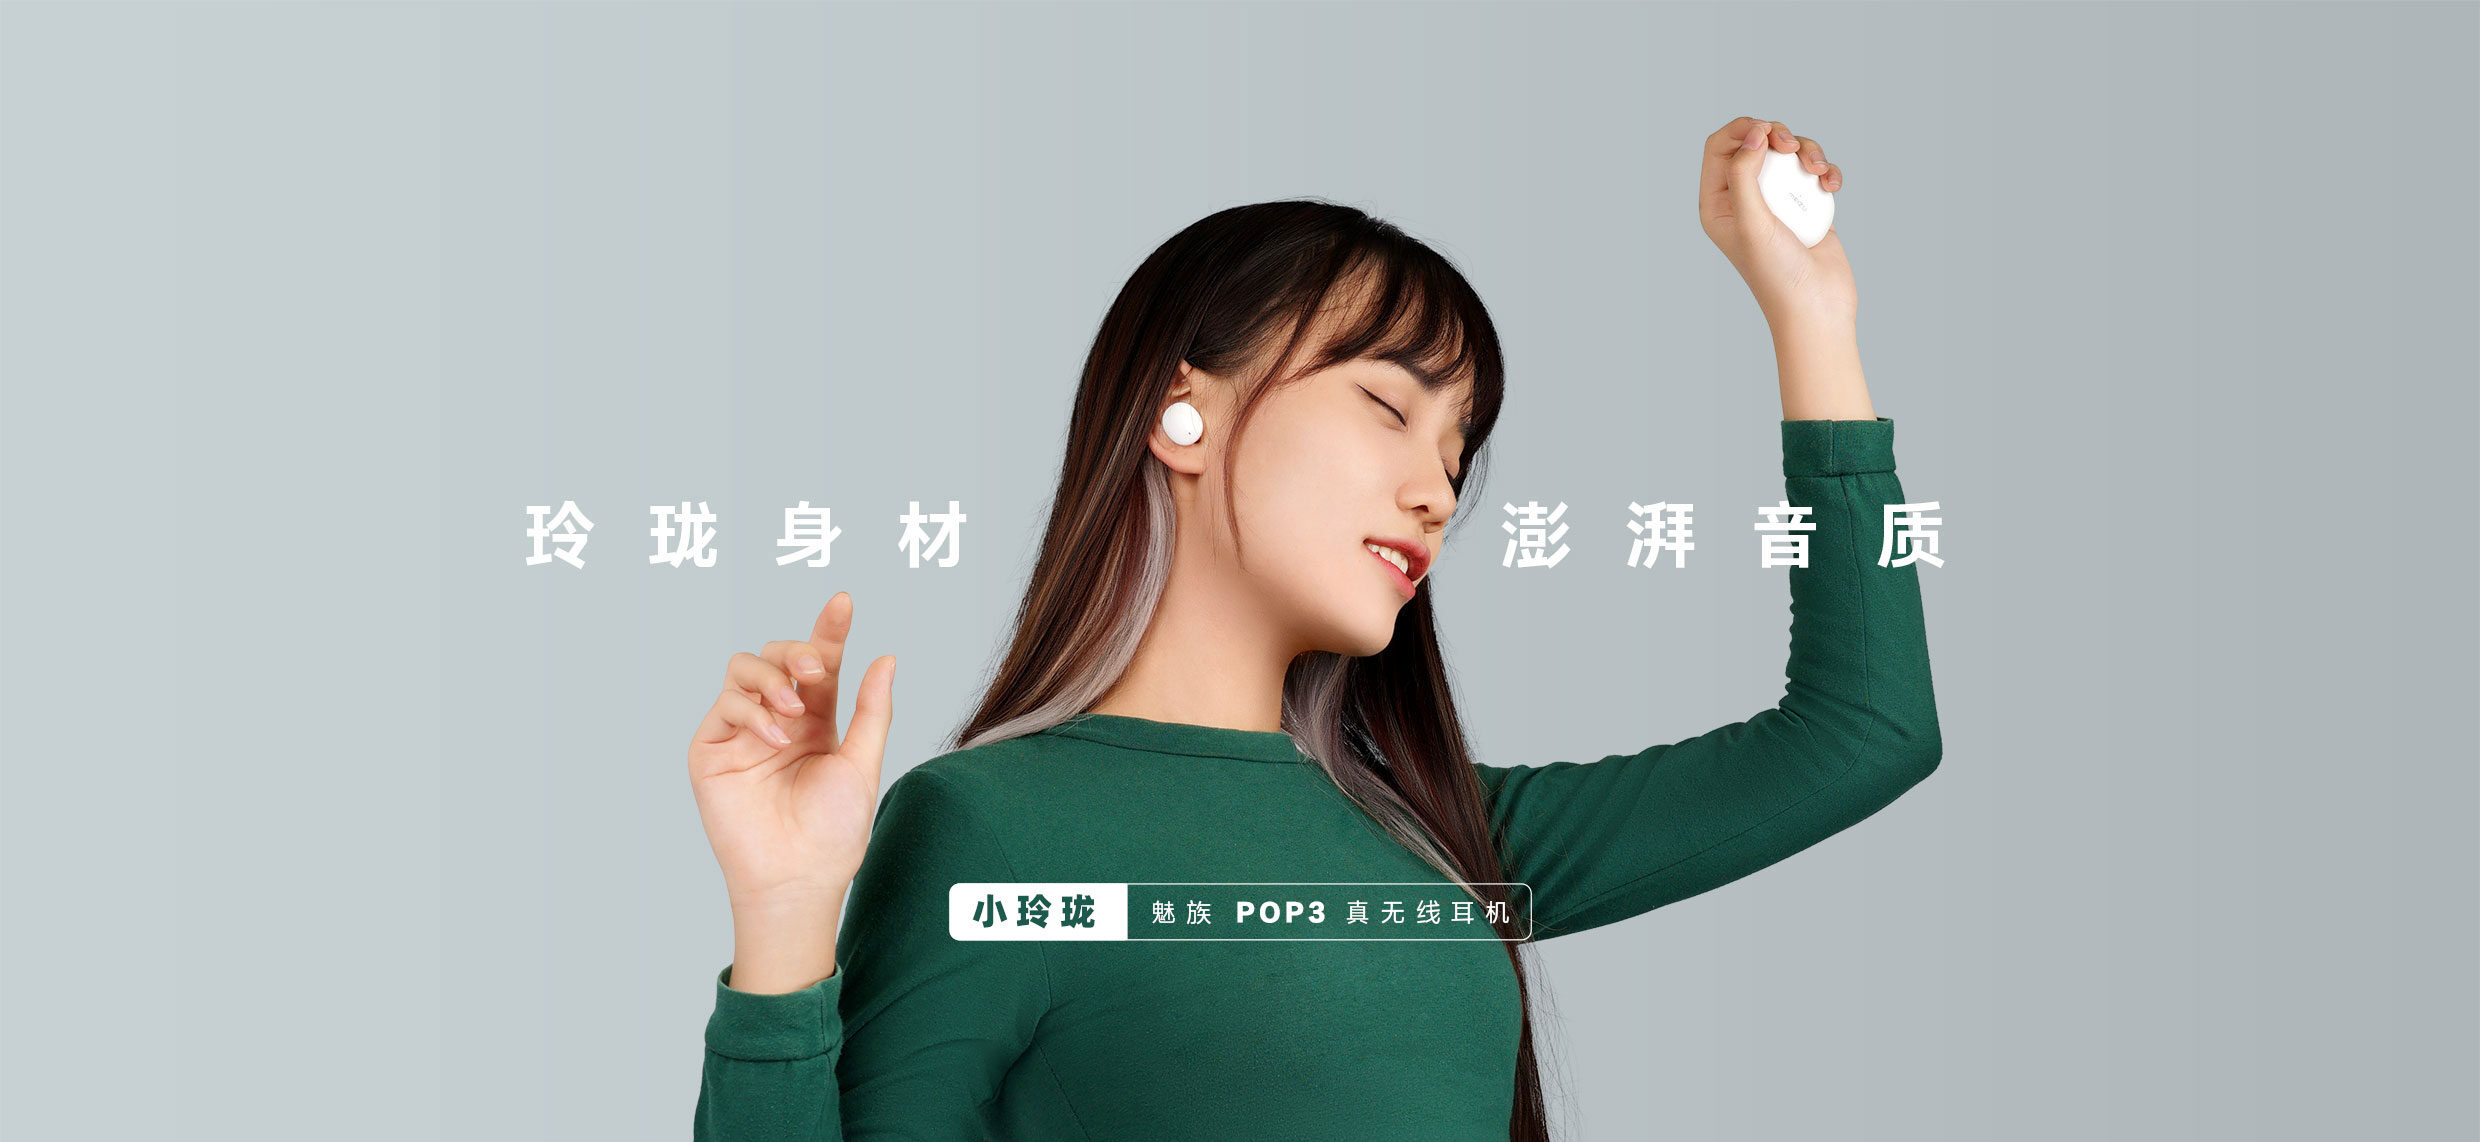 Meizu POP3 TWS Earbuds Poster